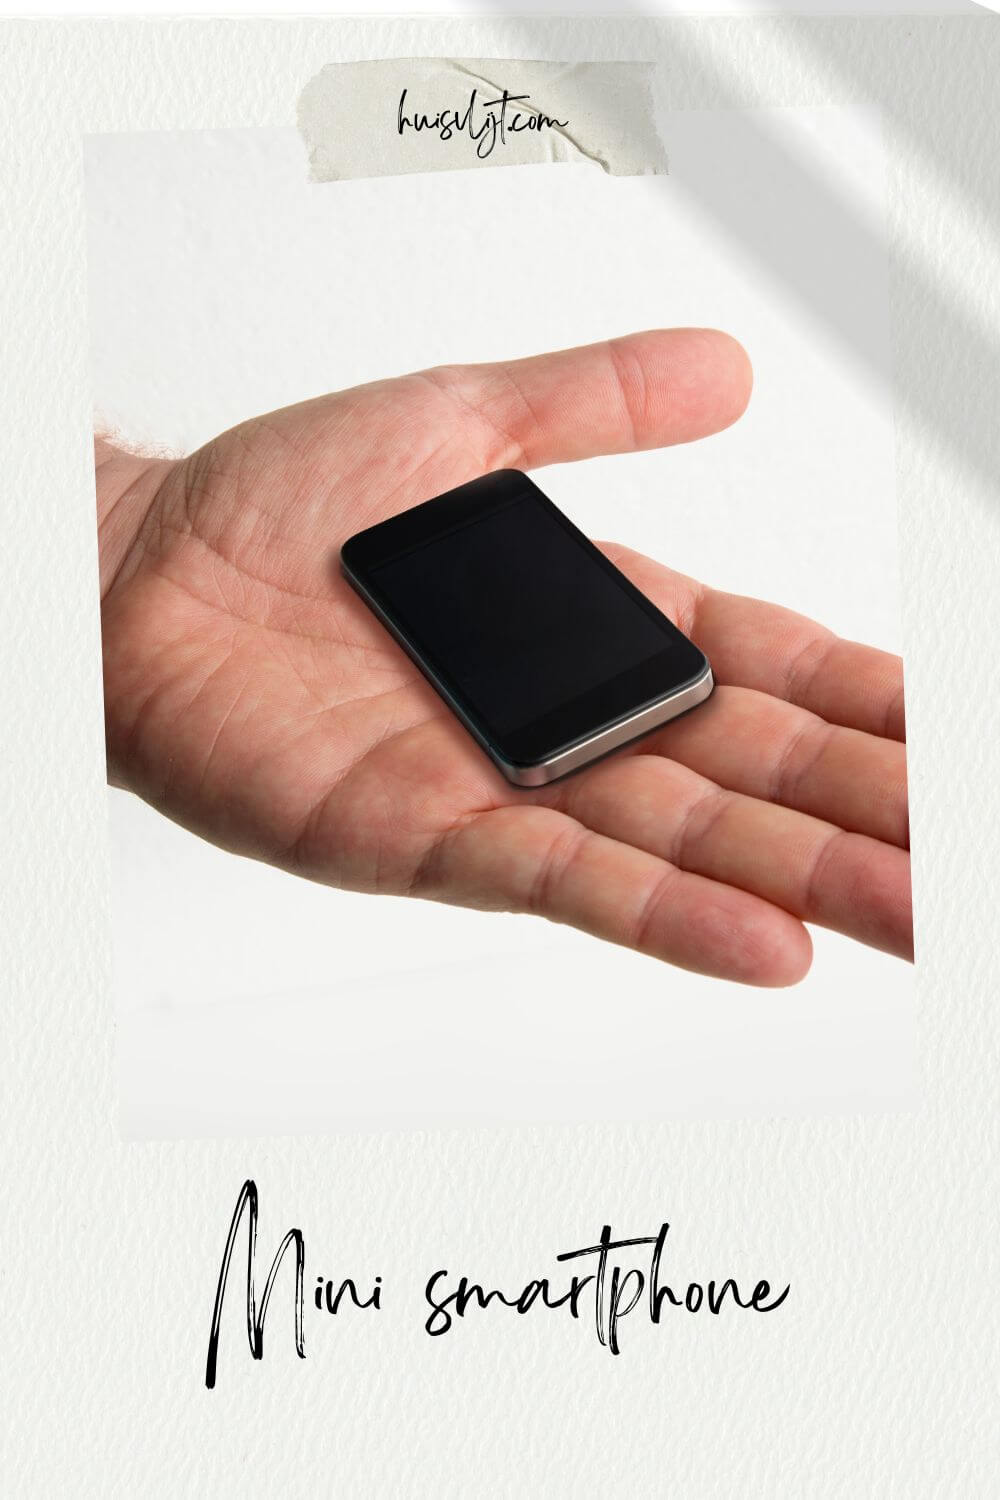 Mini smartphone: Samsung Galaxy Mini, smart phone